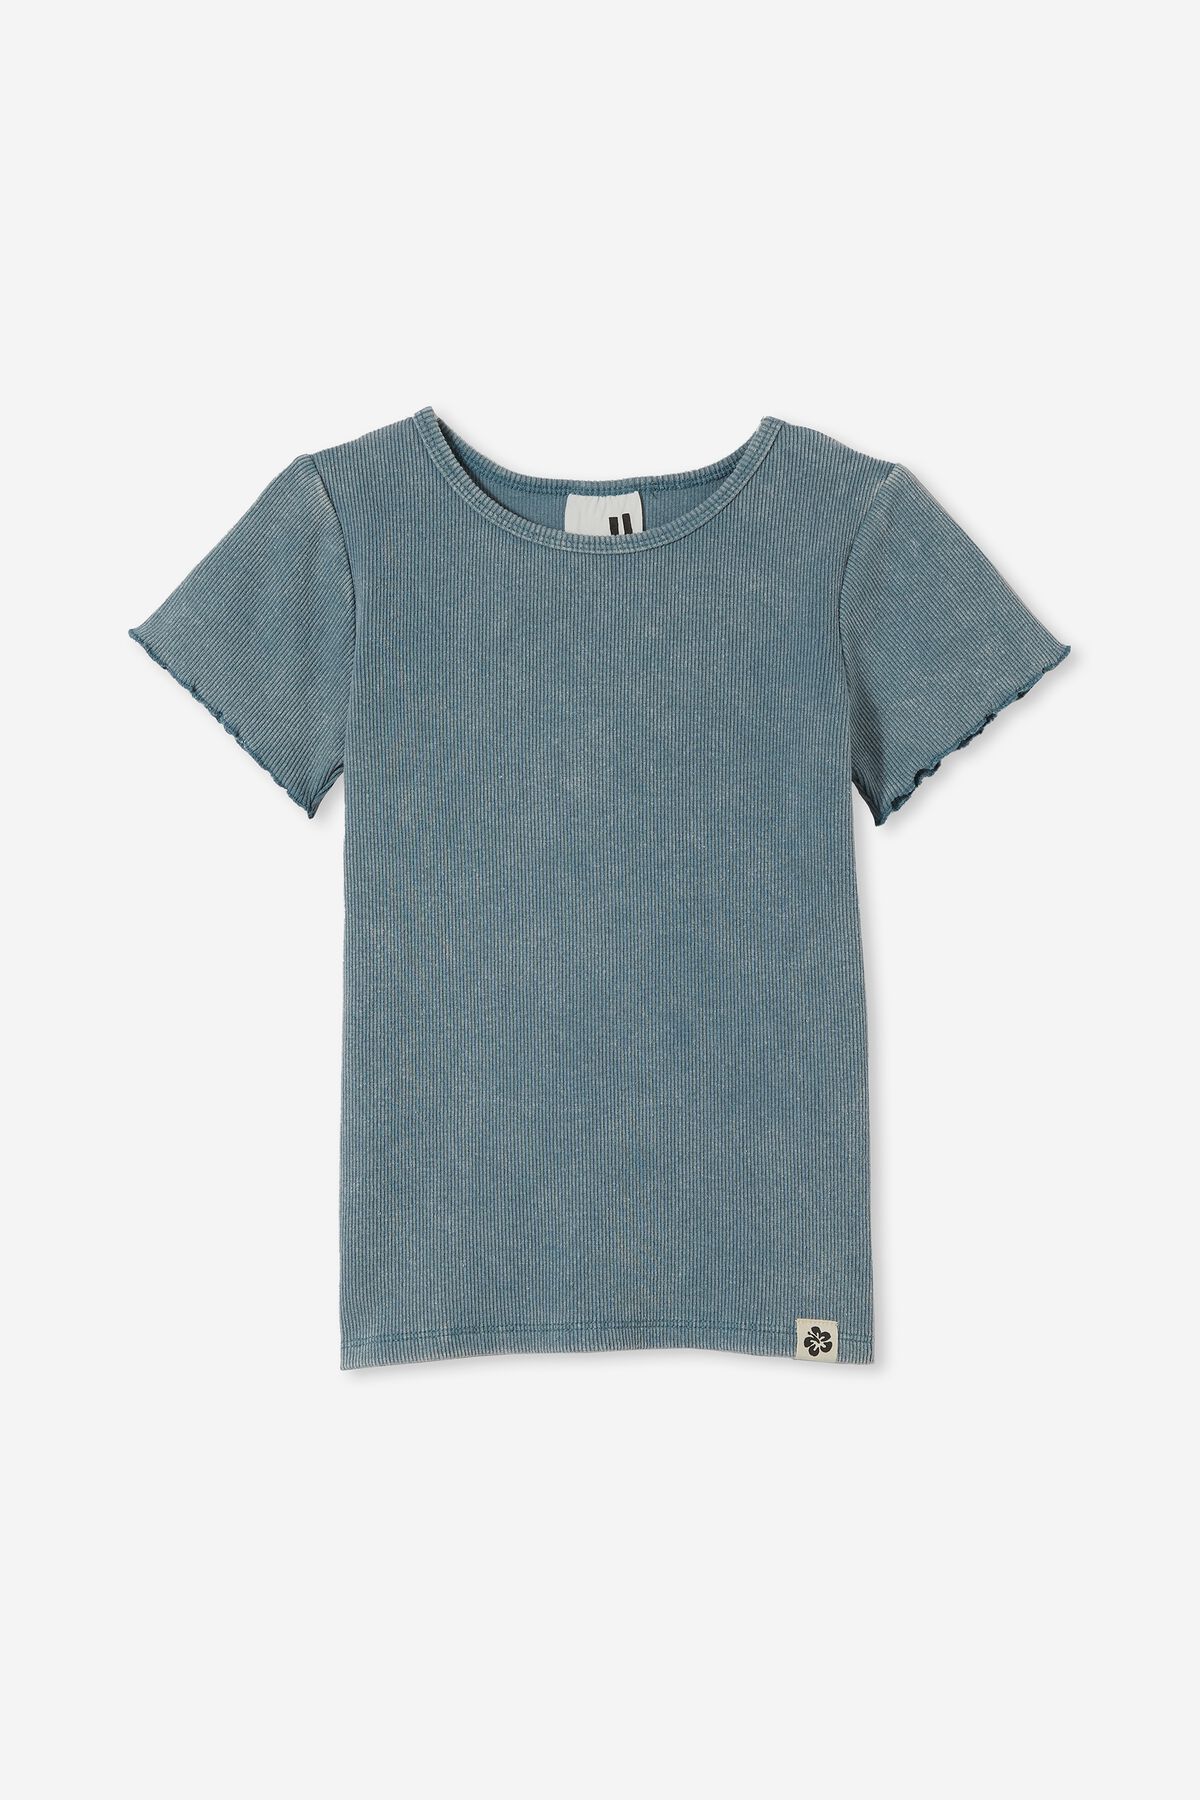 Amelia Short Sleeve Top | Cotton On (ANZ)